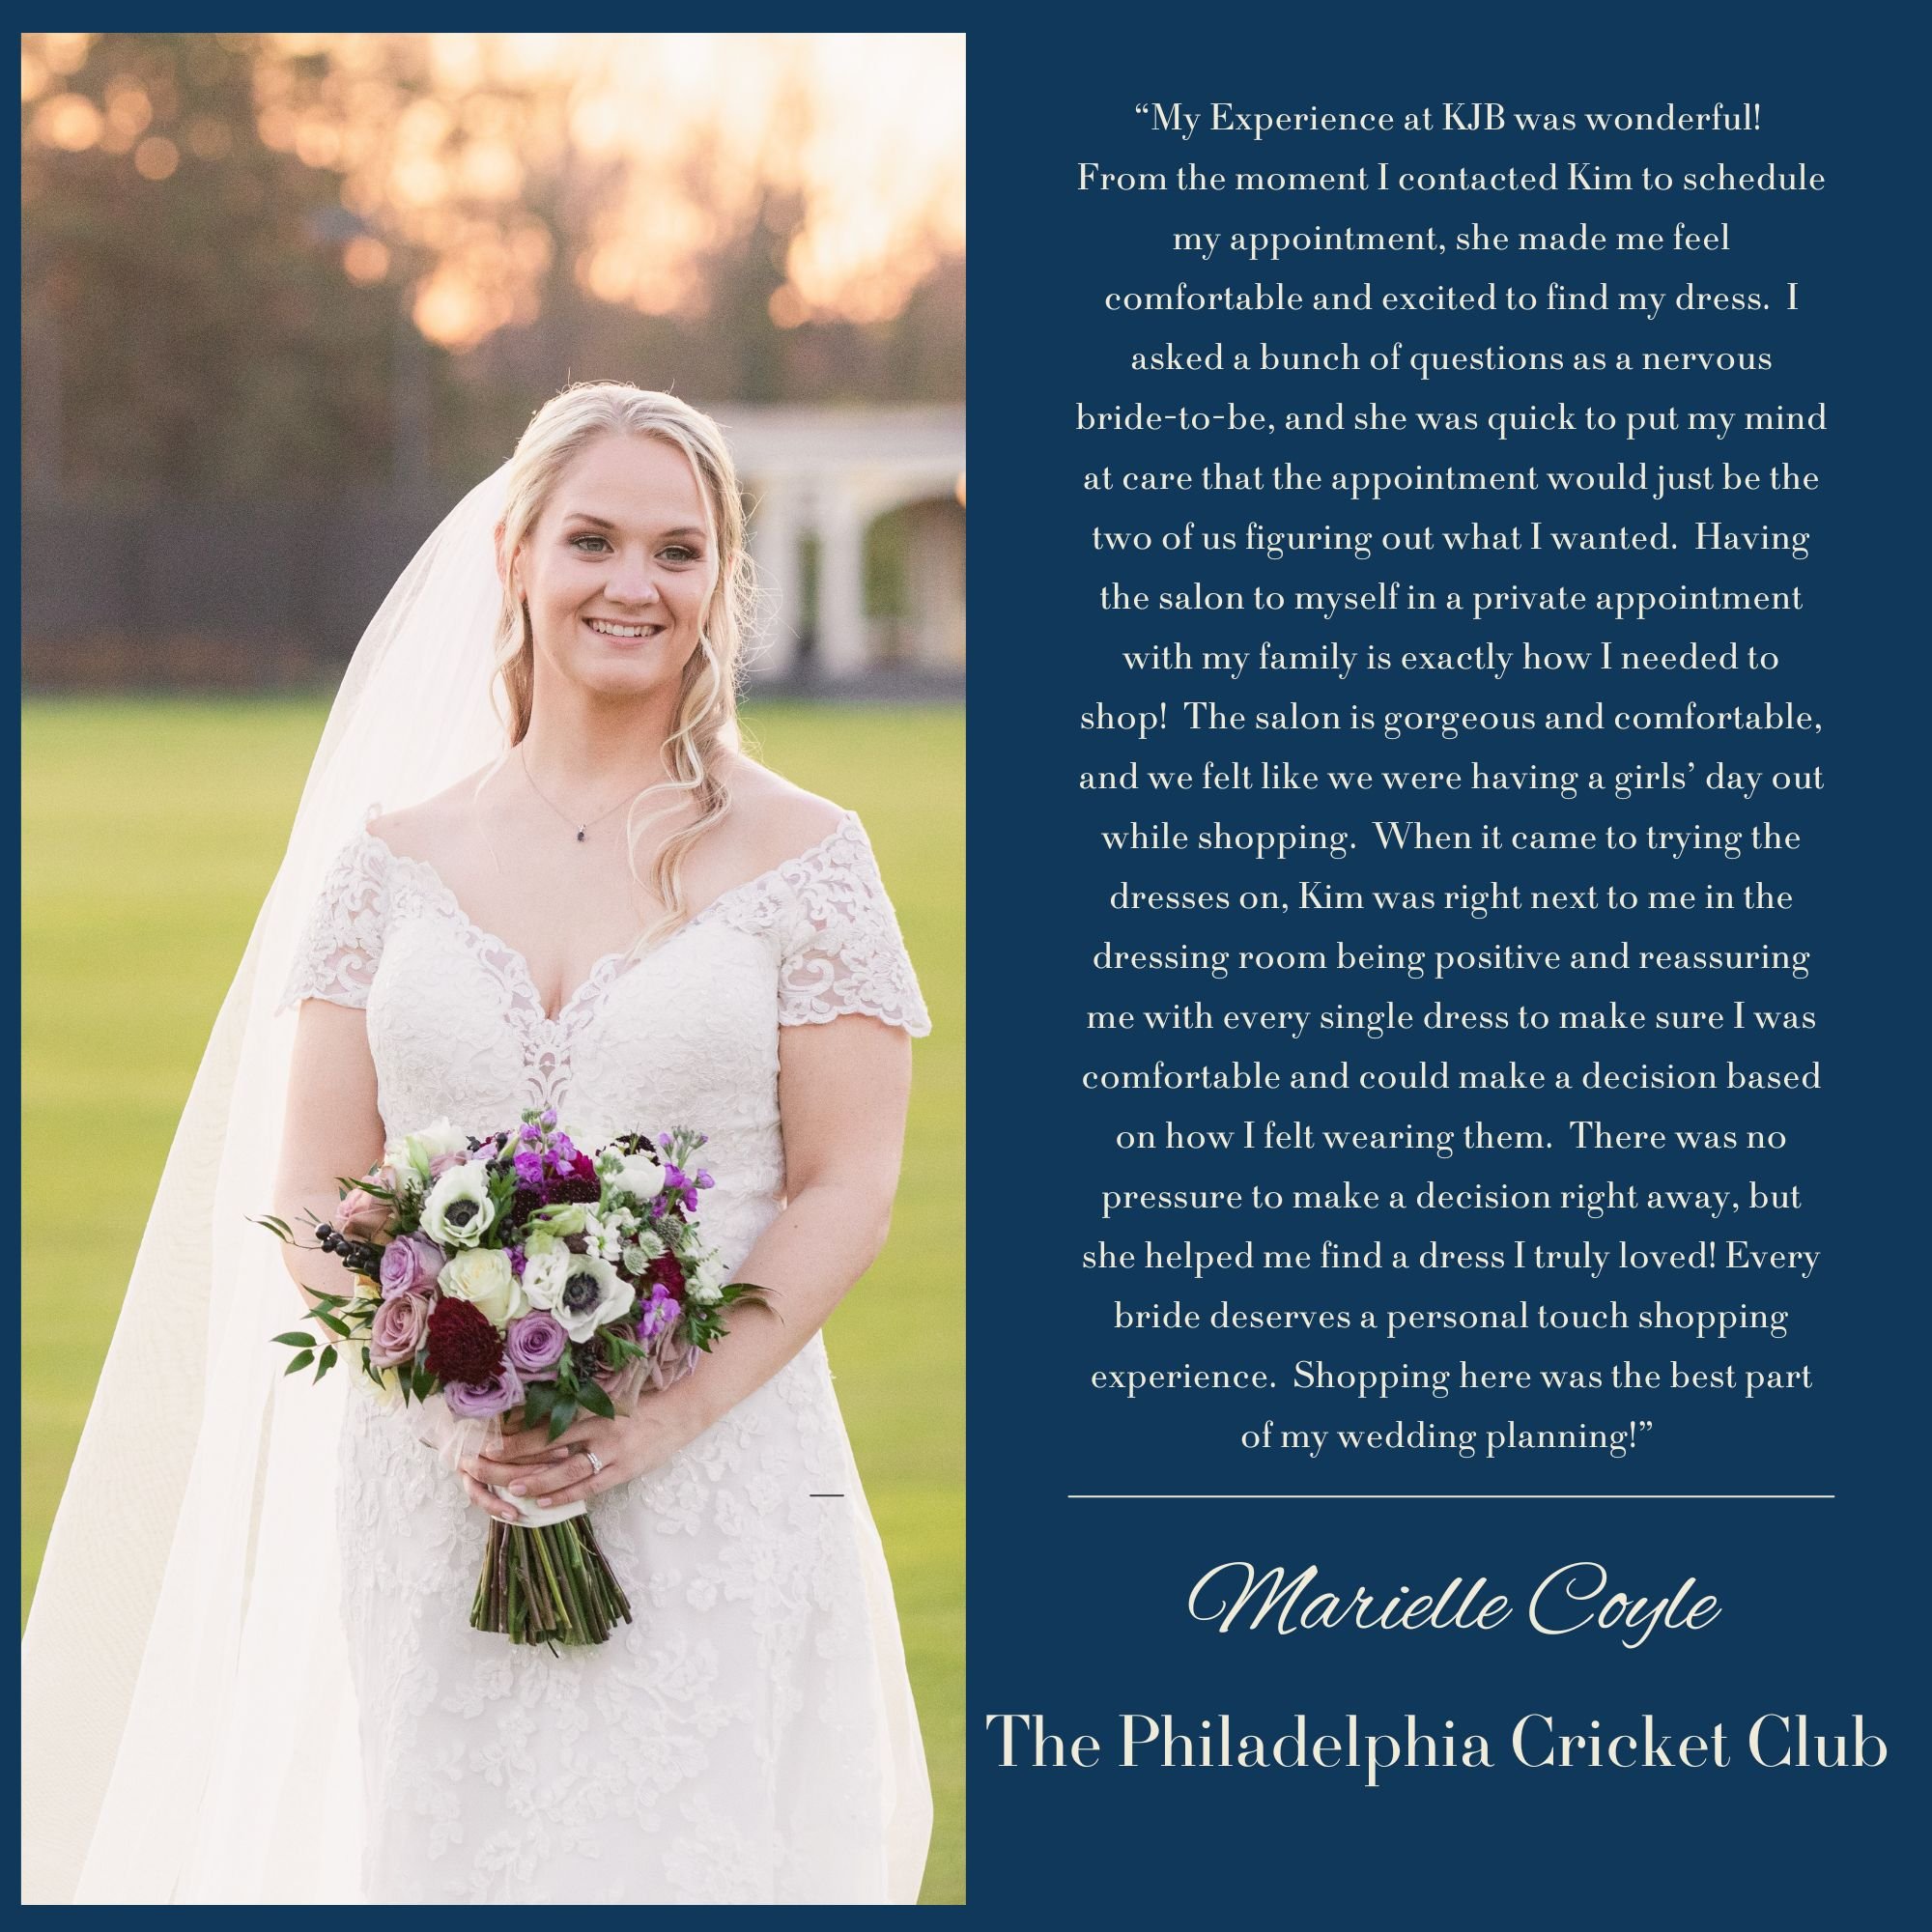 The Philadelphia Cricket Club